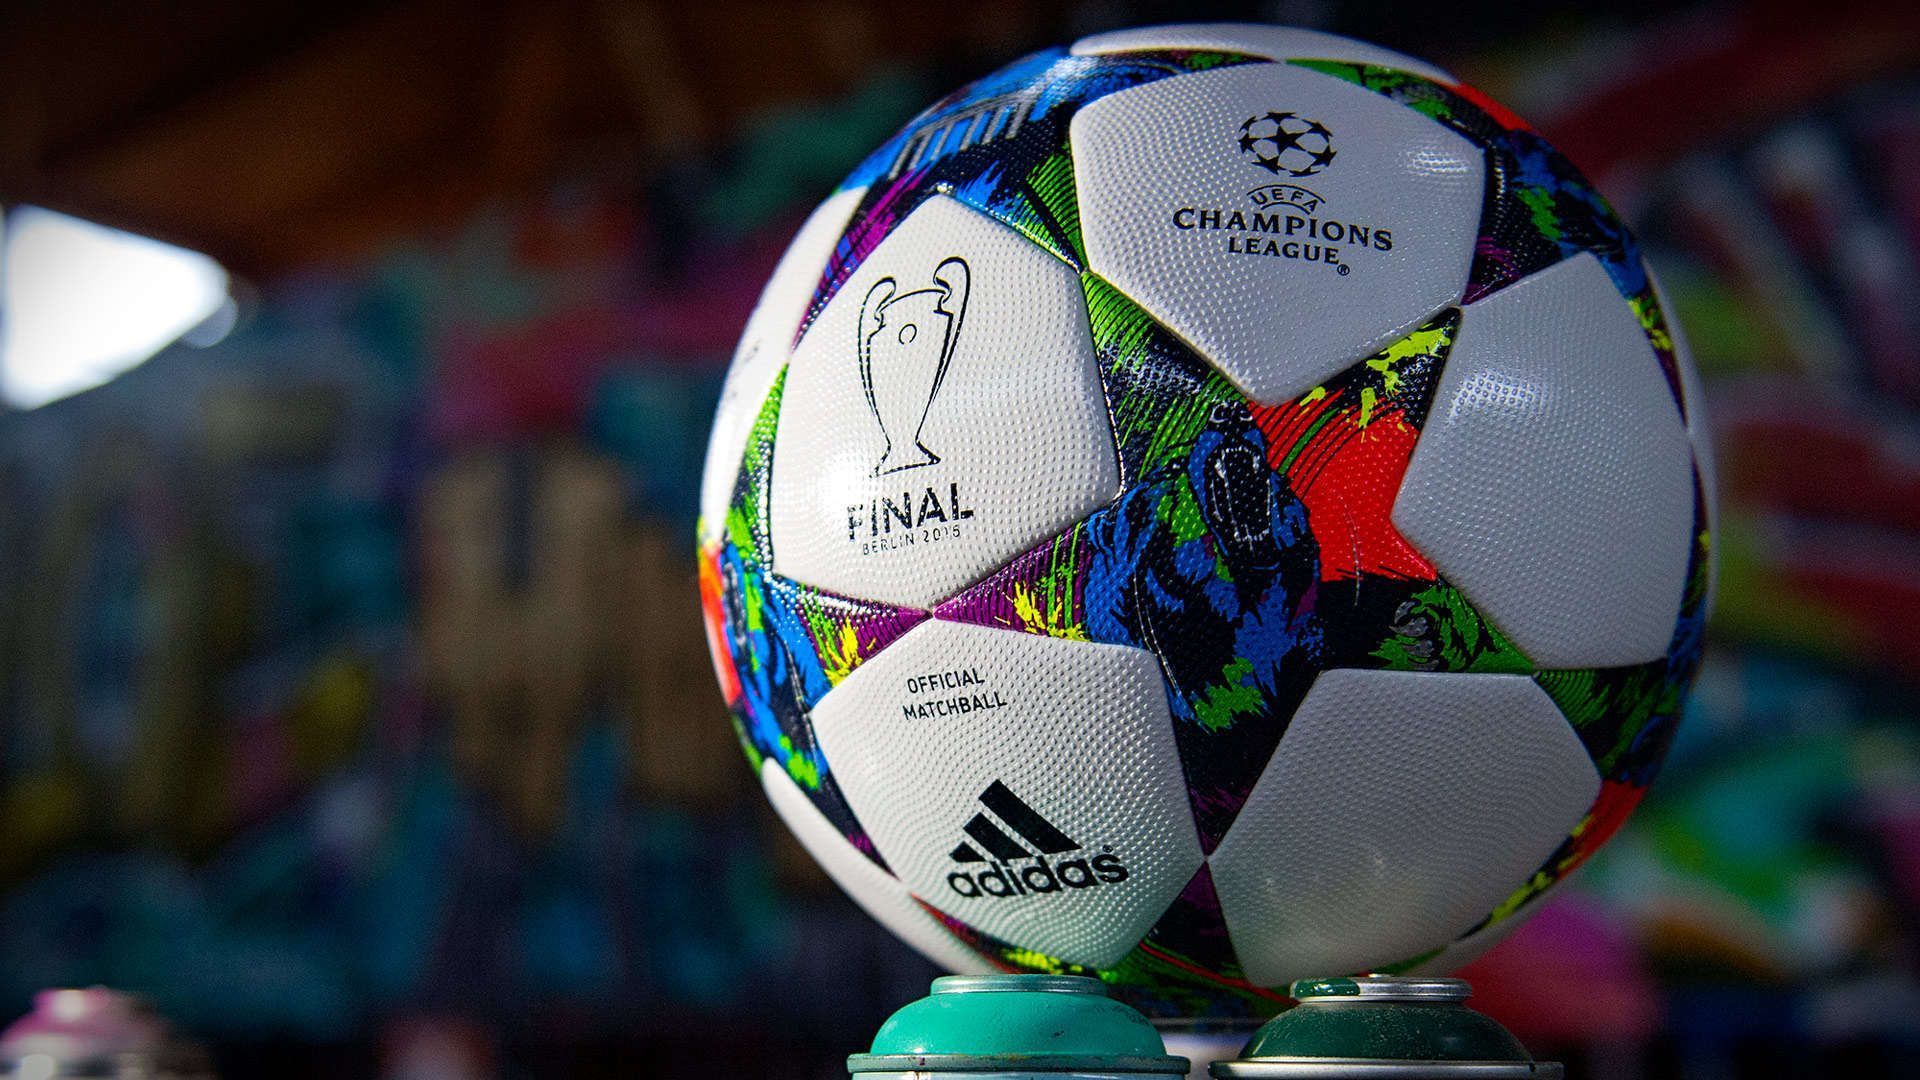 UEFA-champions-league-2015-ball-wallpapers-hd-1080p-1920x1080-Desktop-04-AMB1.jpg